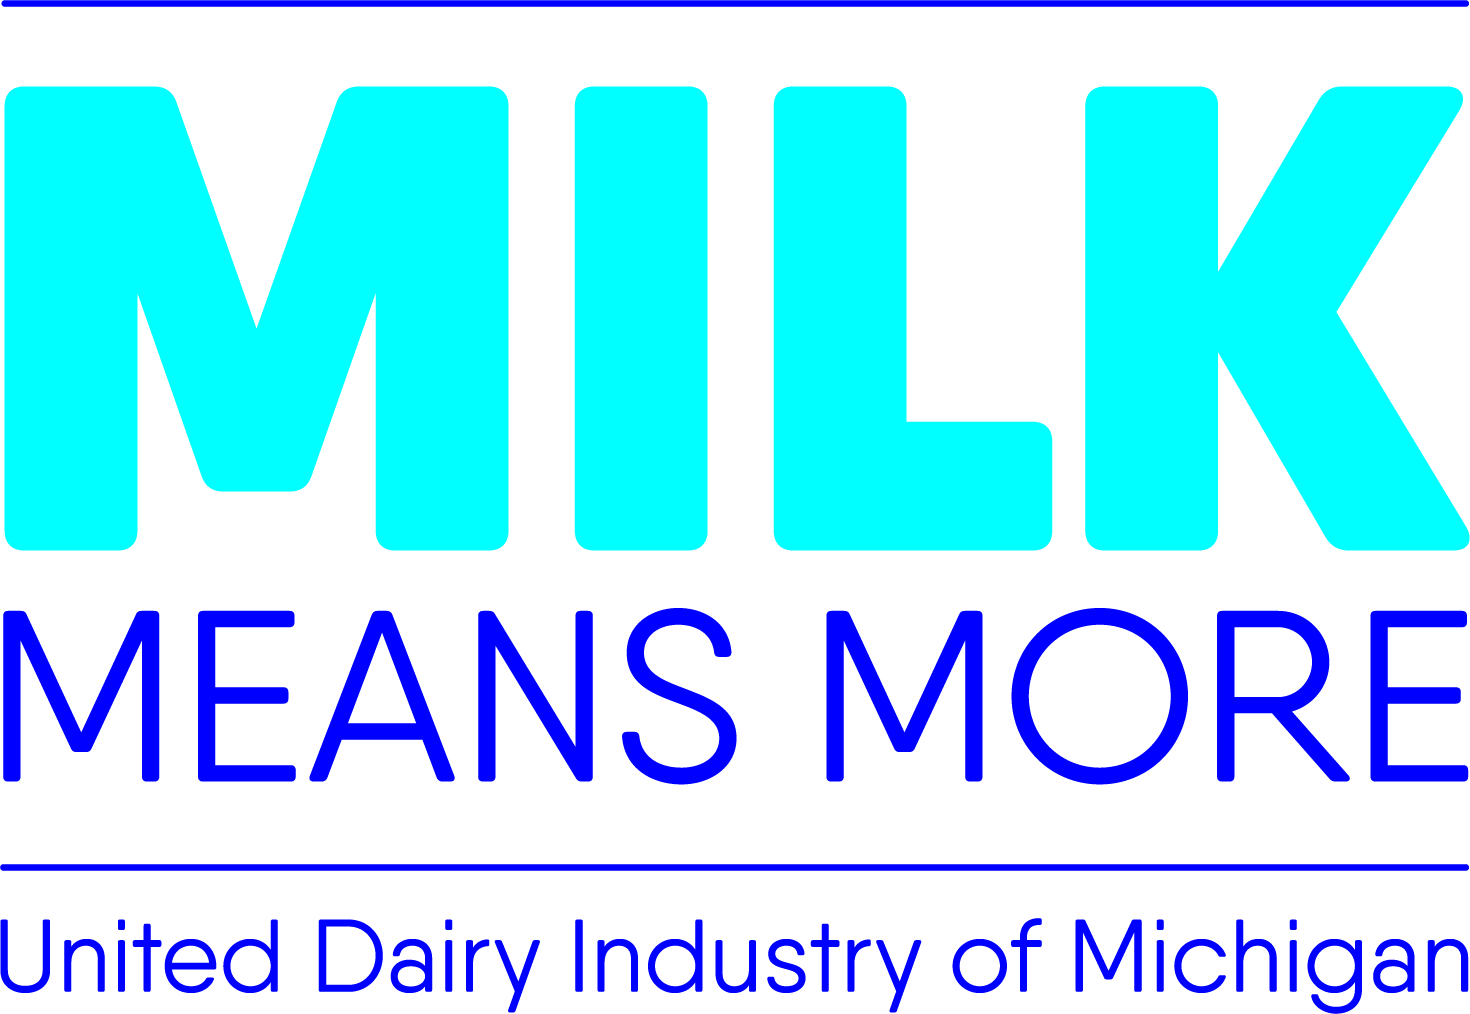 United Dairy Industries